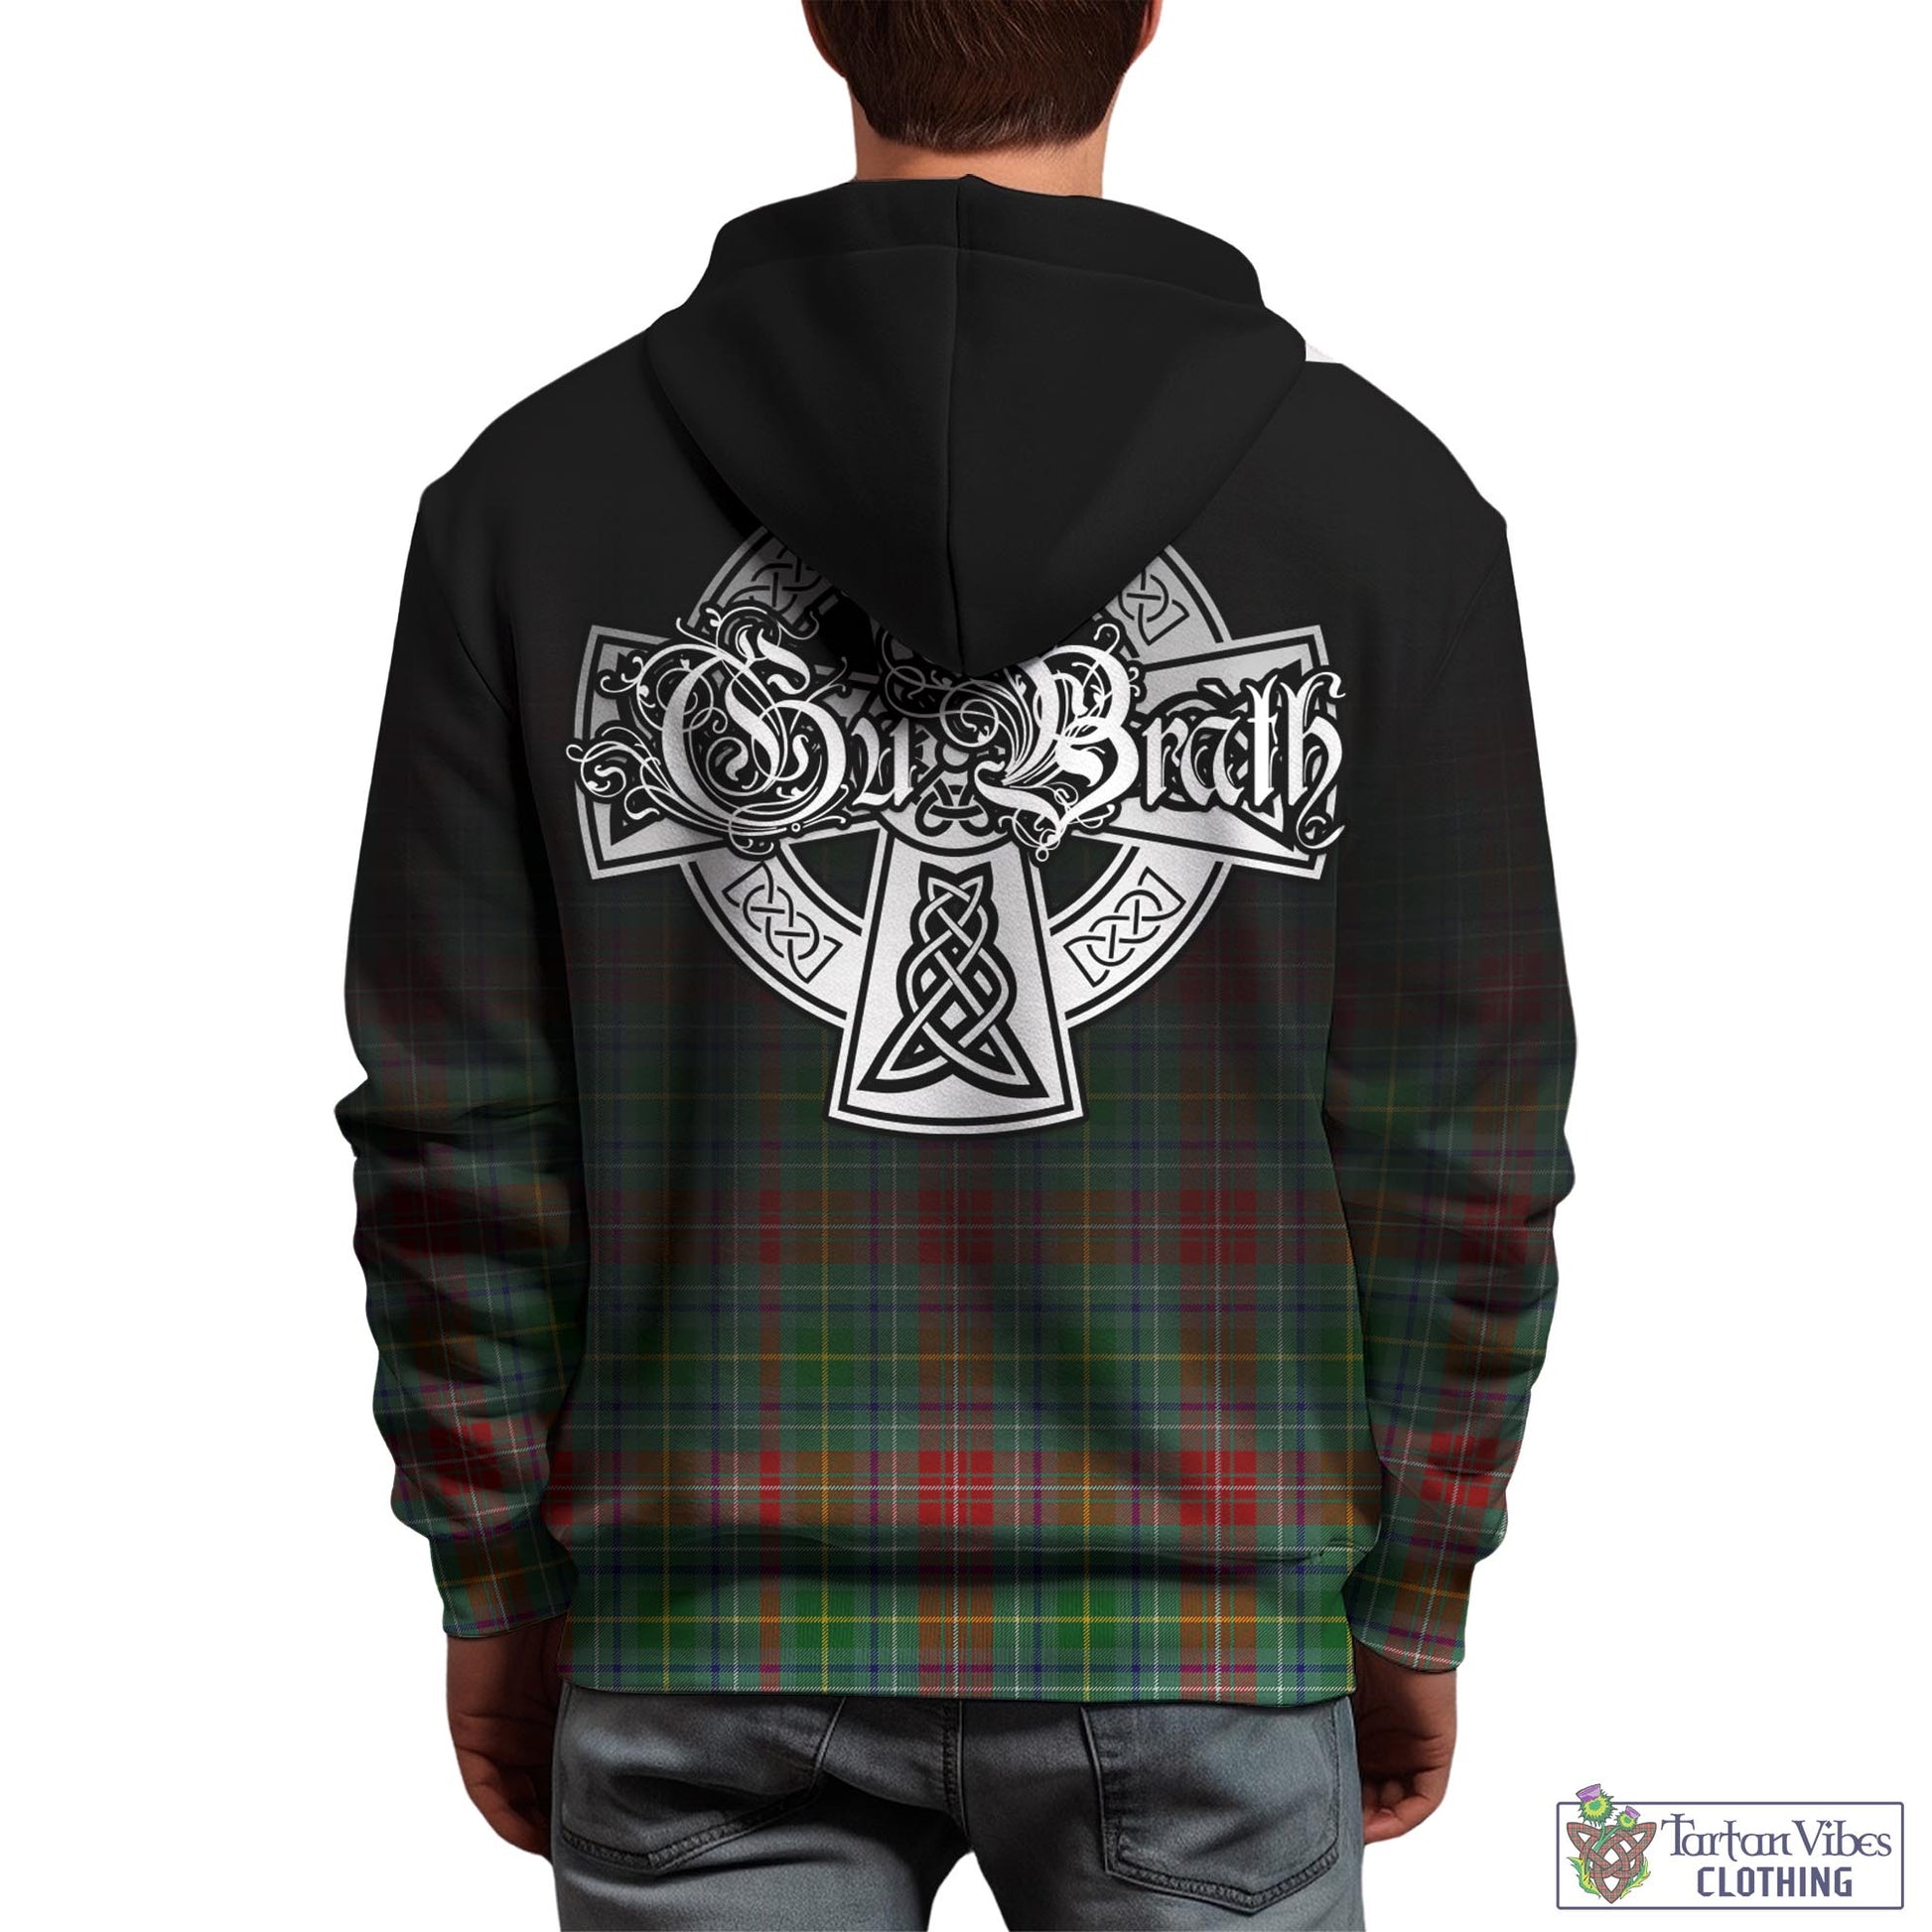 Tartan Vibes Clothing Muirhead Tartan Hoodie Featuring Alba Gu Brath Family Crest Celtic Inspired